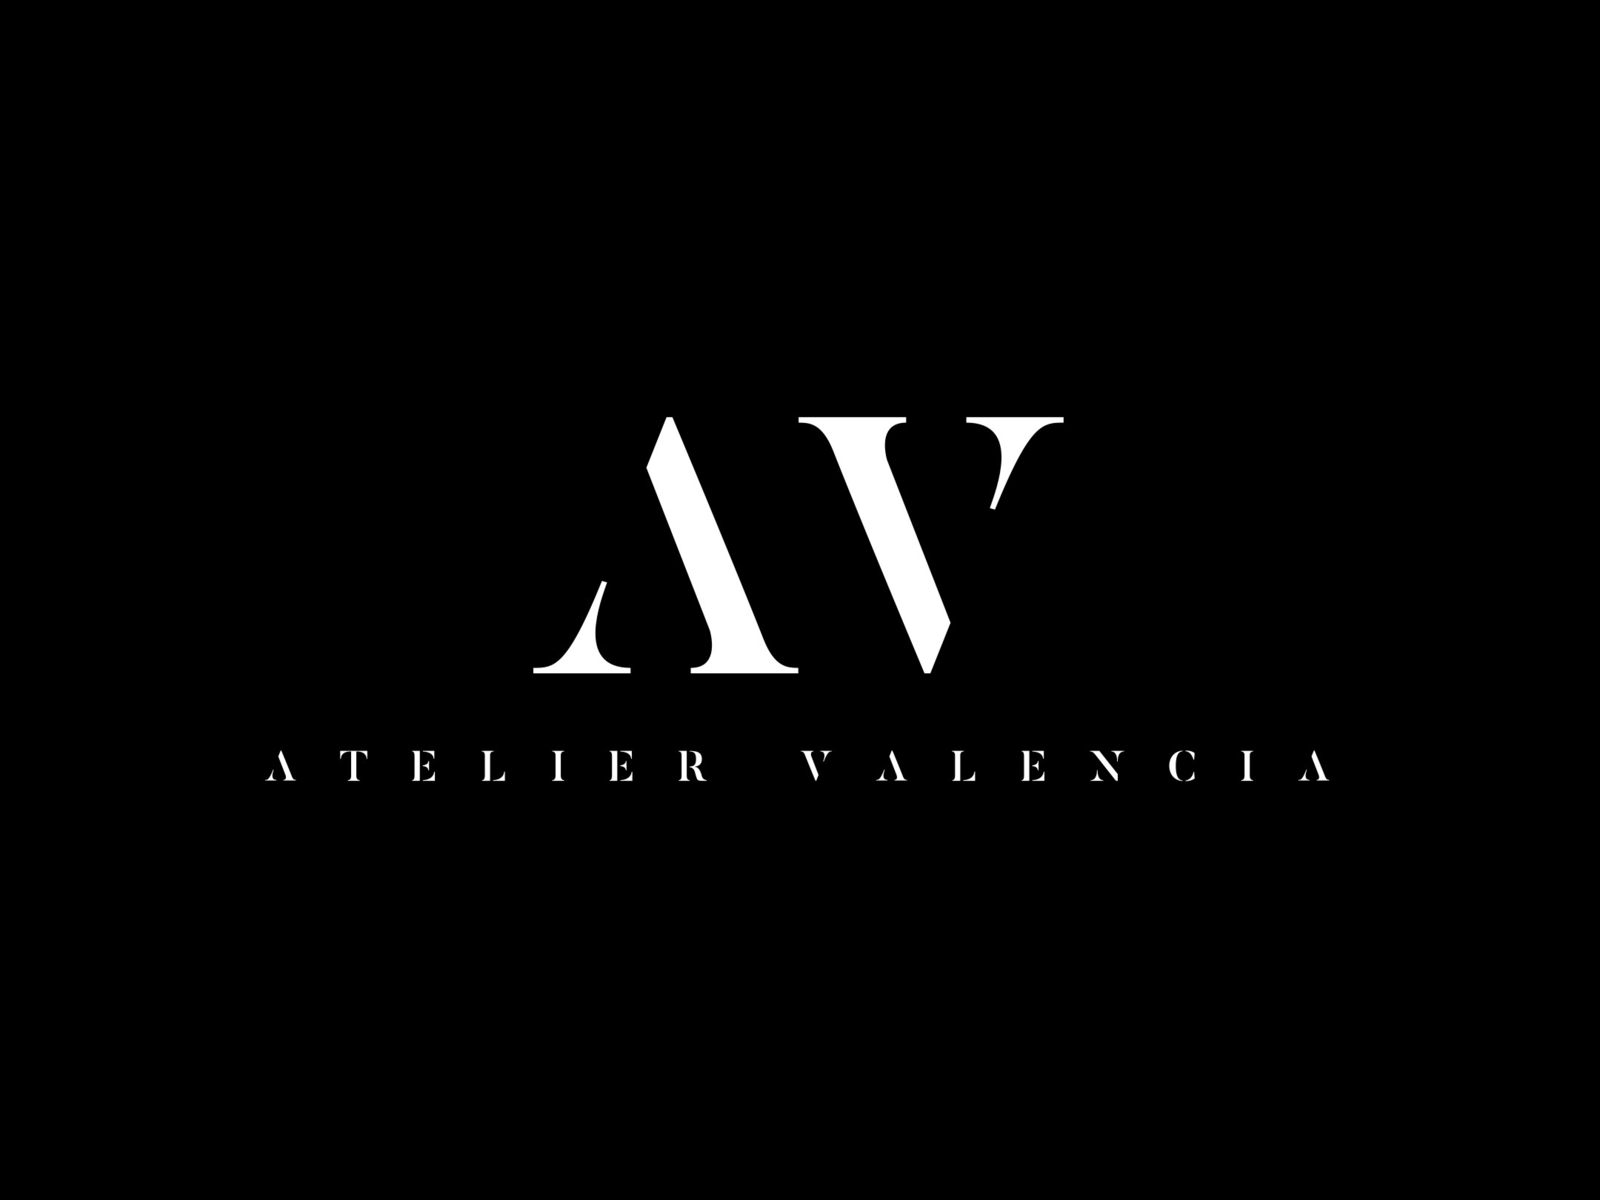 Atelier Valencia - Logo Design by Fabian Pontén on Dribbble